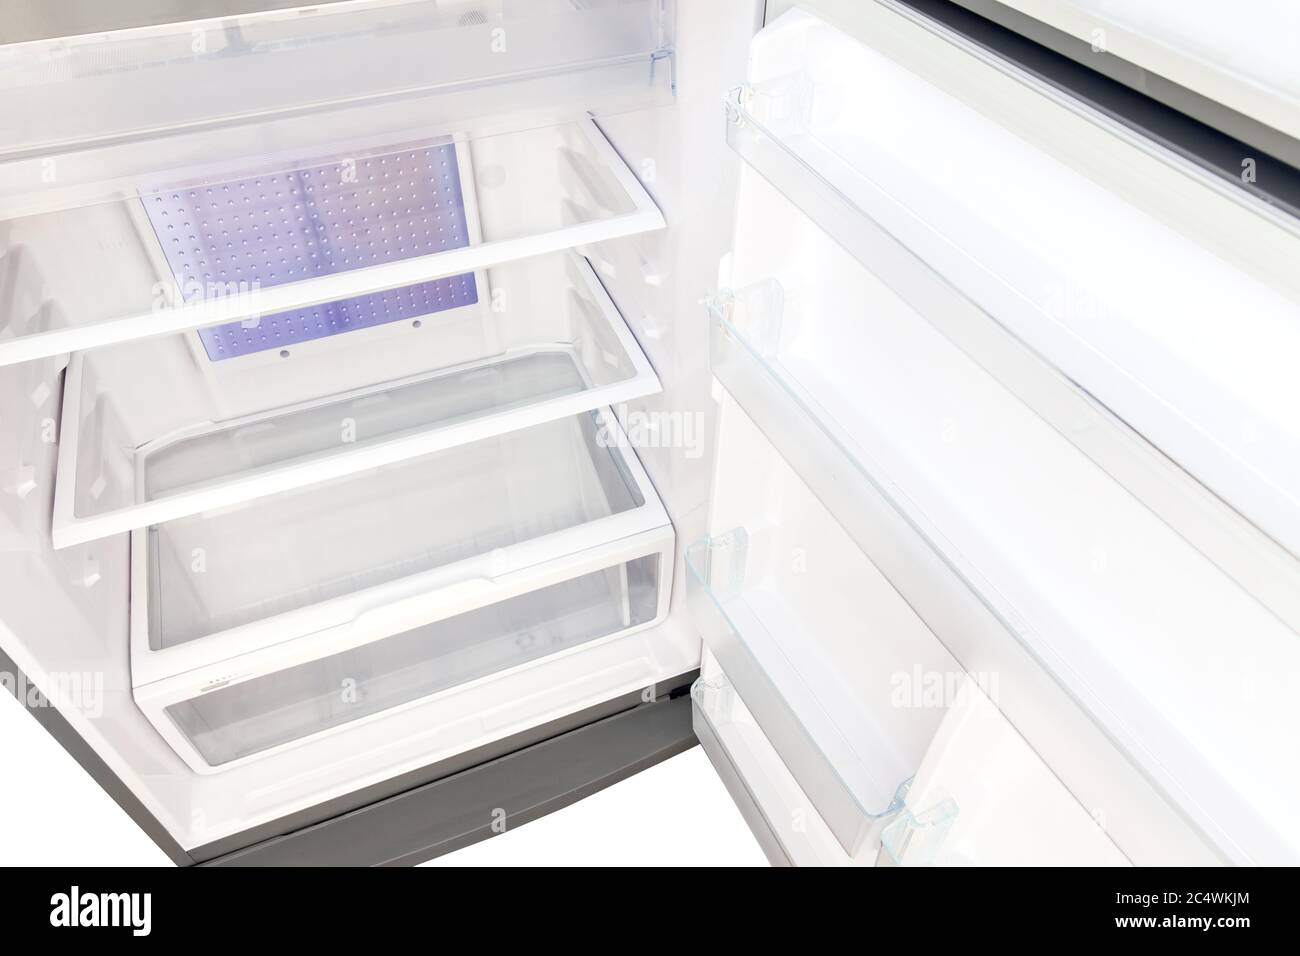 https://c8.alamy.com/comp/2C4WKJM/the-refrigerator-empty-glass-shelves-and-a-tray-for-vegetables-top-view-inside-the-refrigerator-2C4WKJM.jpg